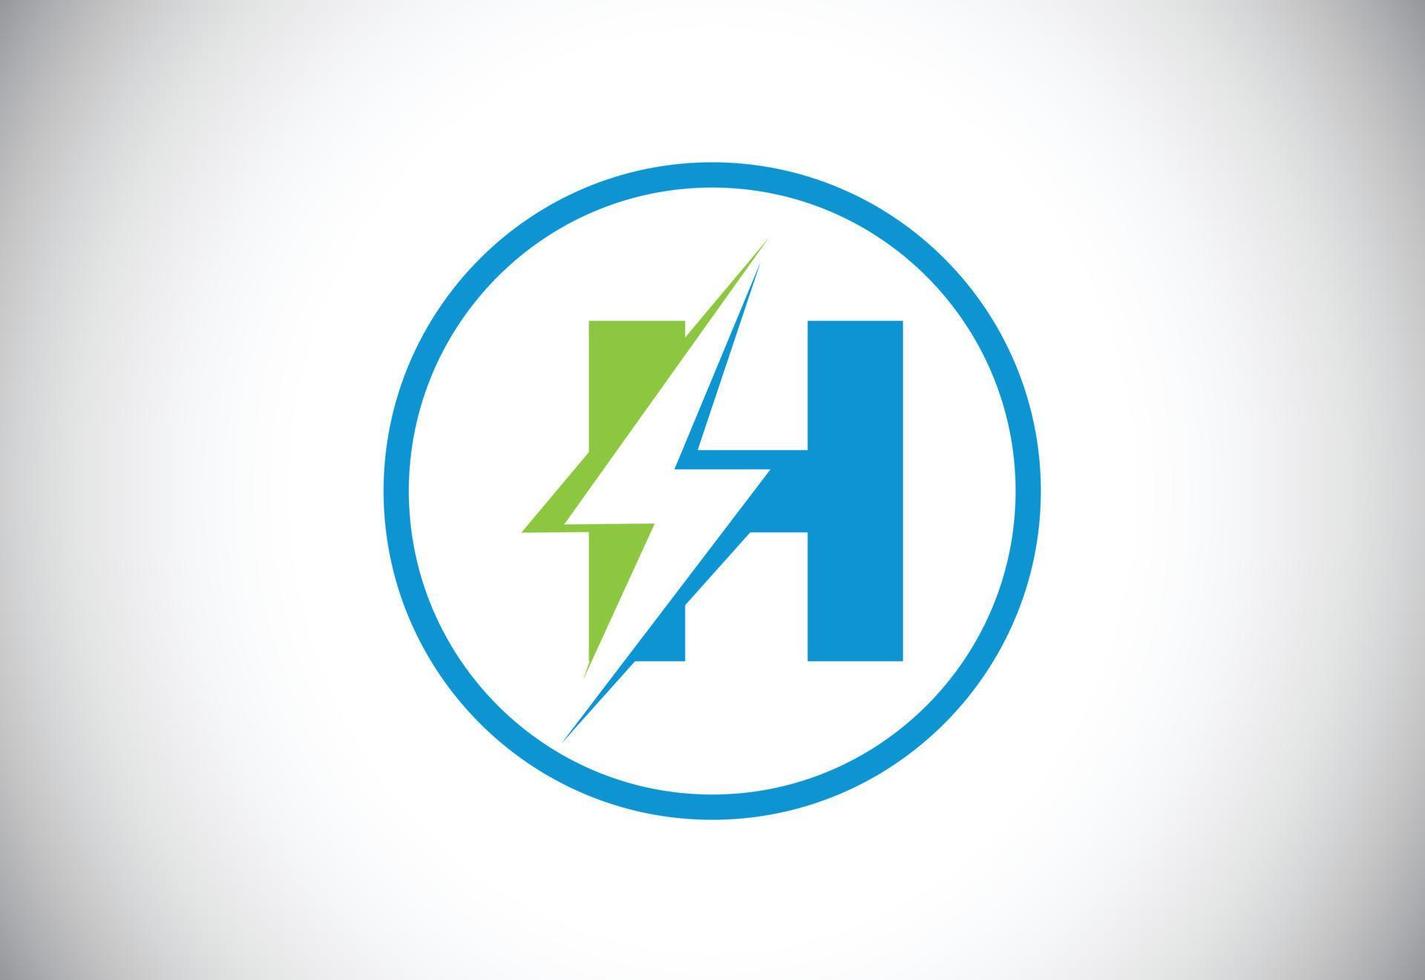 Initial H letter logo design with lighting thunder bolt. Electric bolt letter logo vector